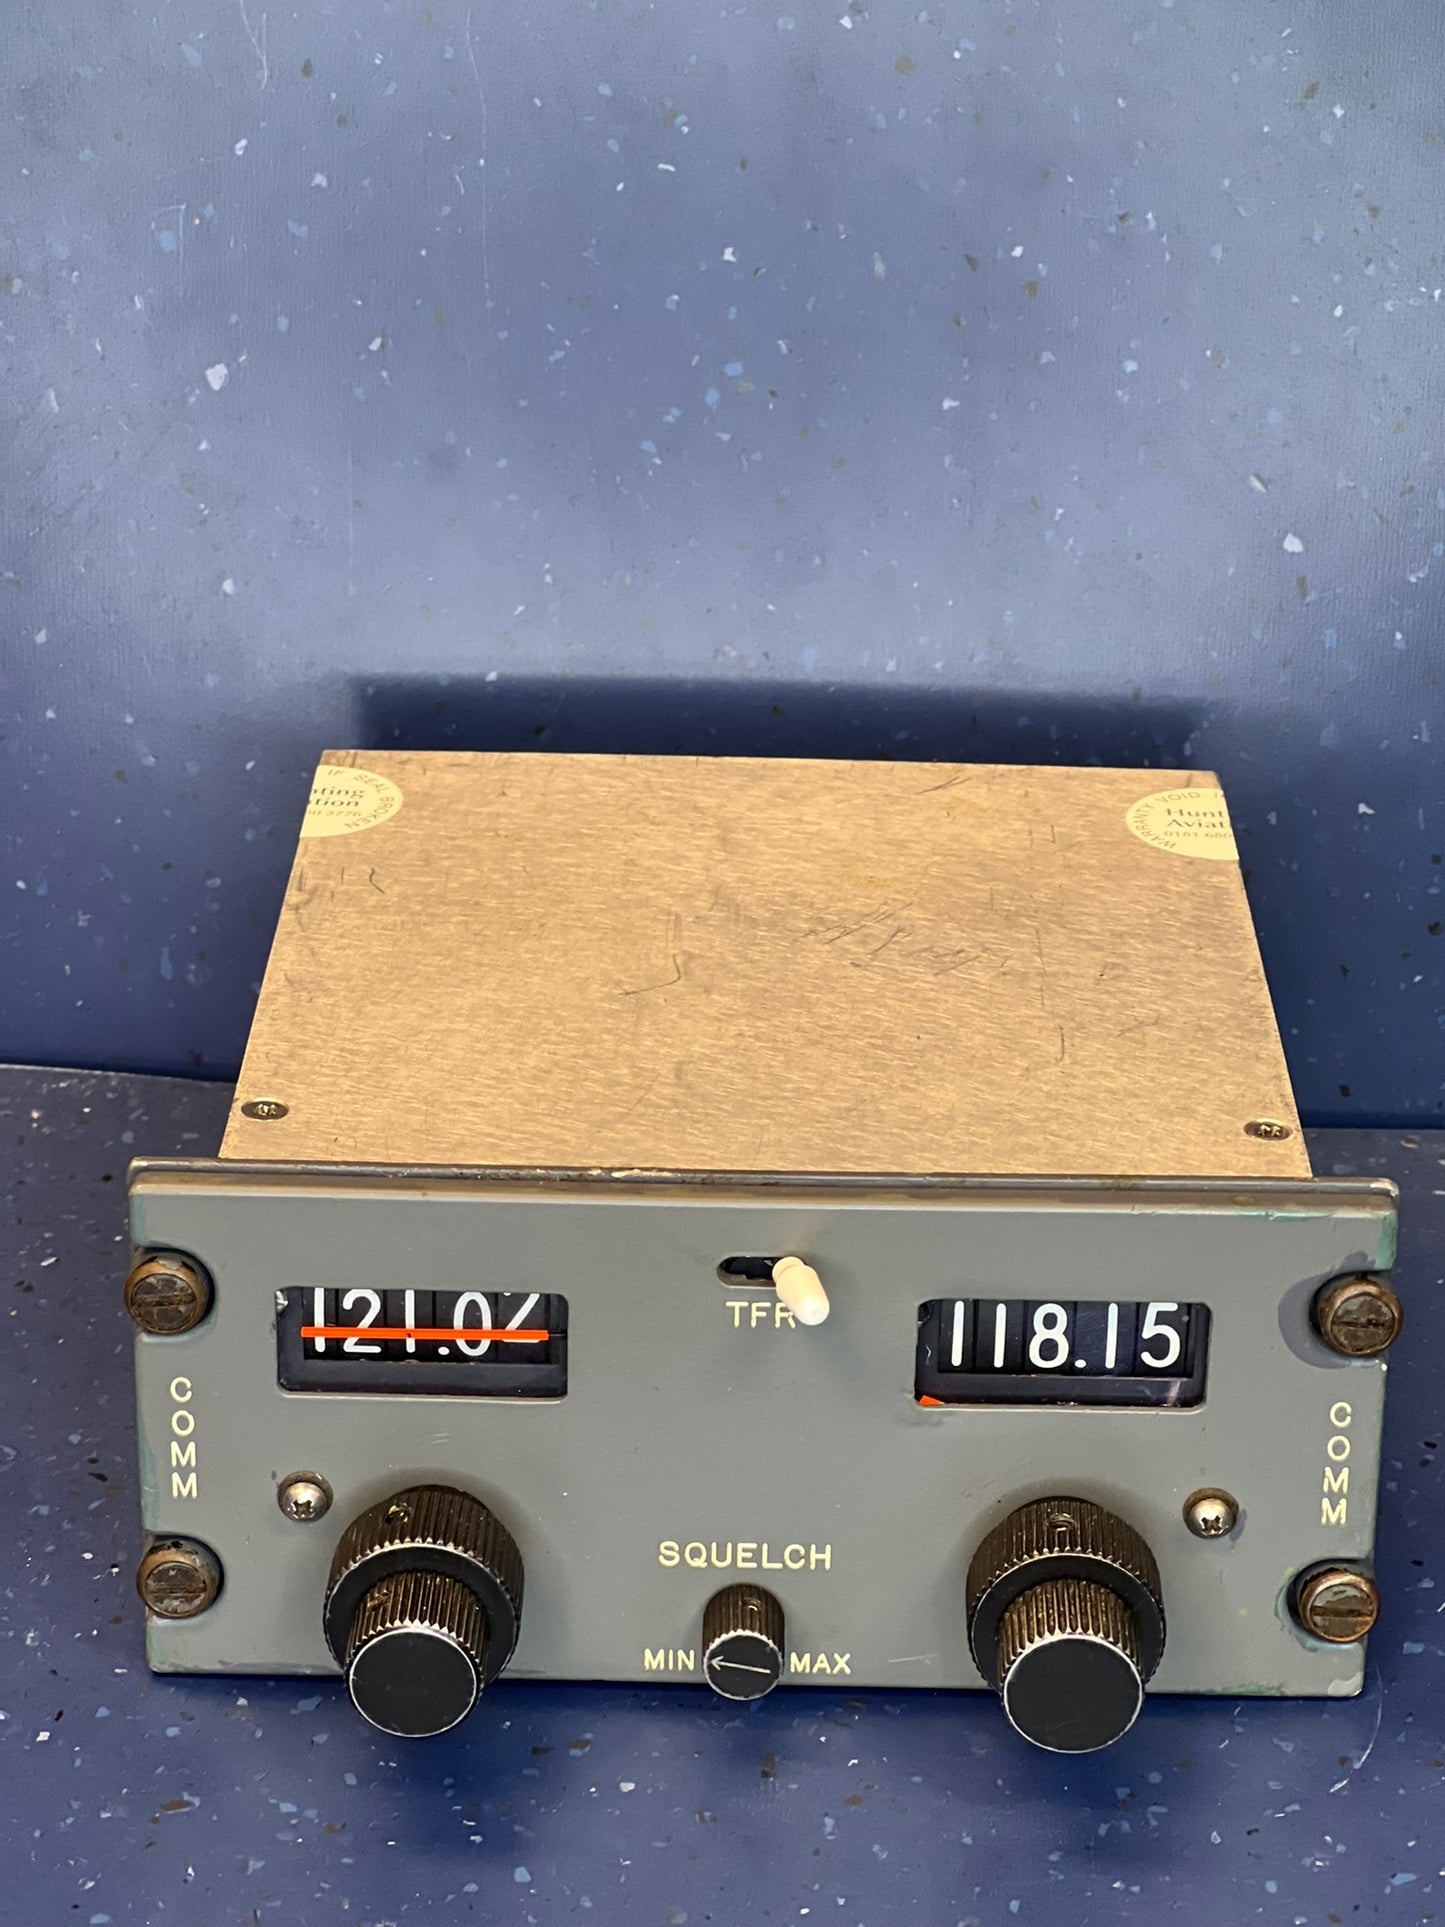 Authentic 1990’s Communication Control Panel